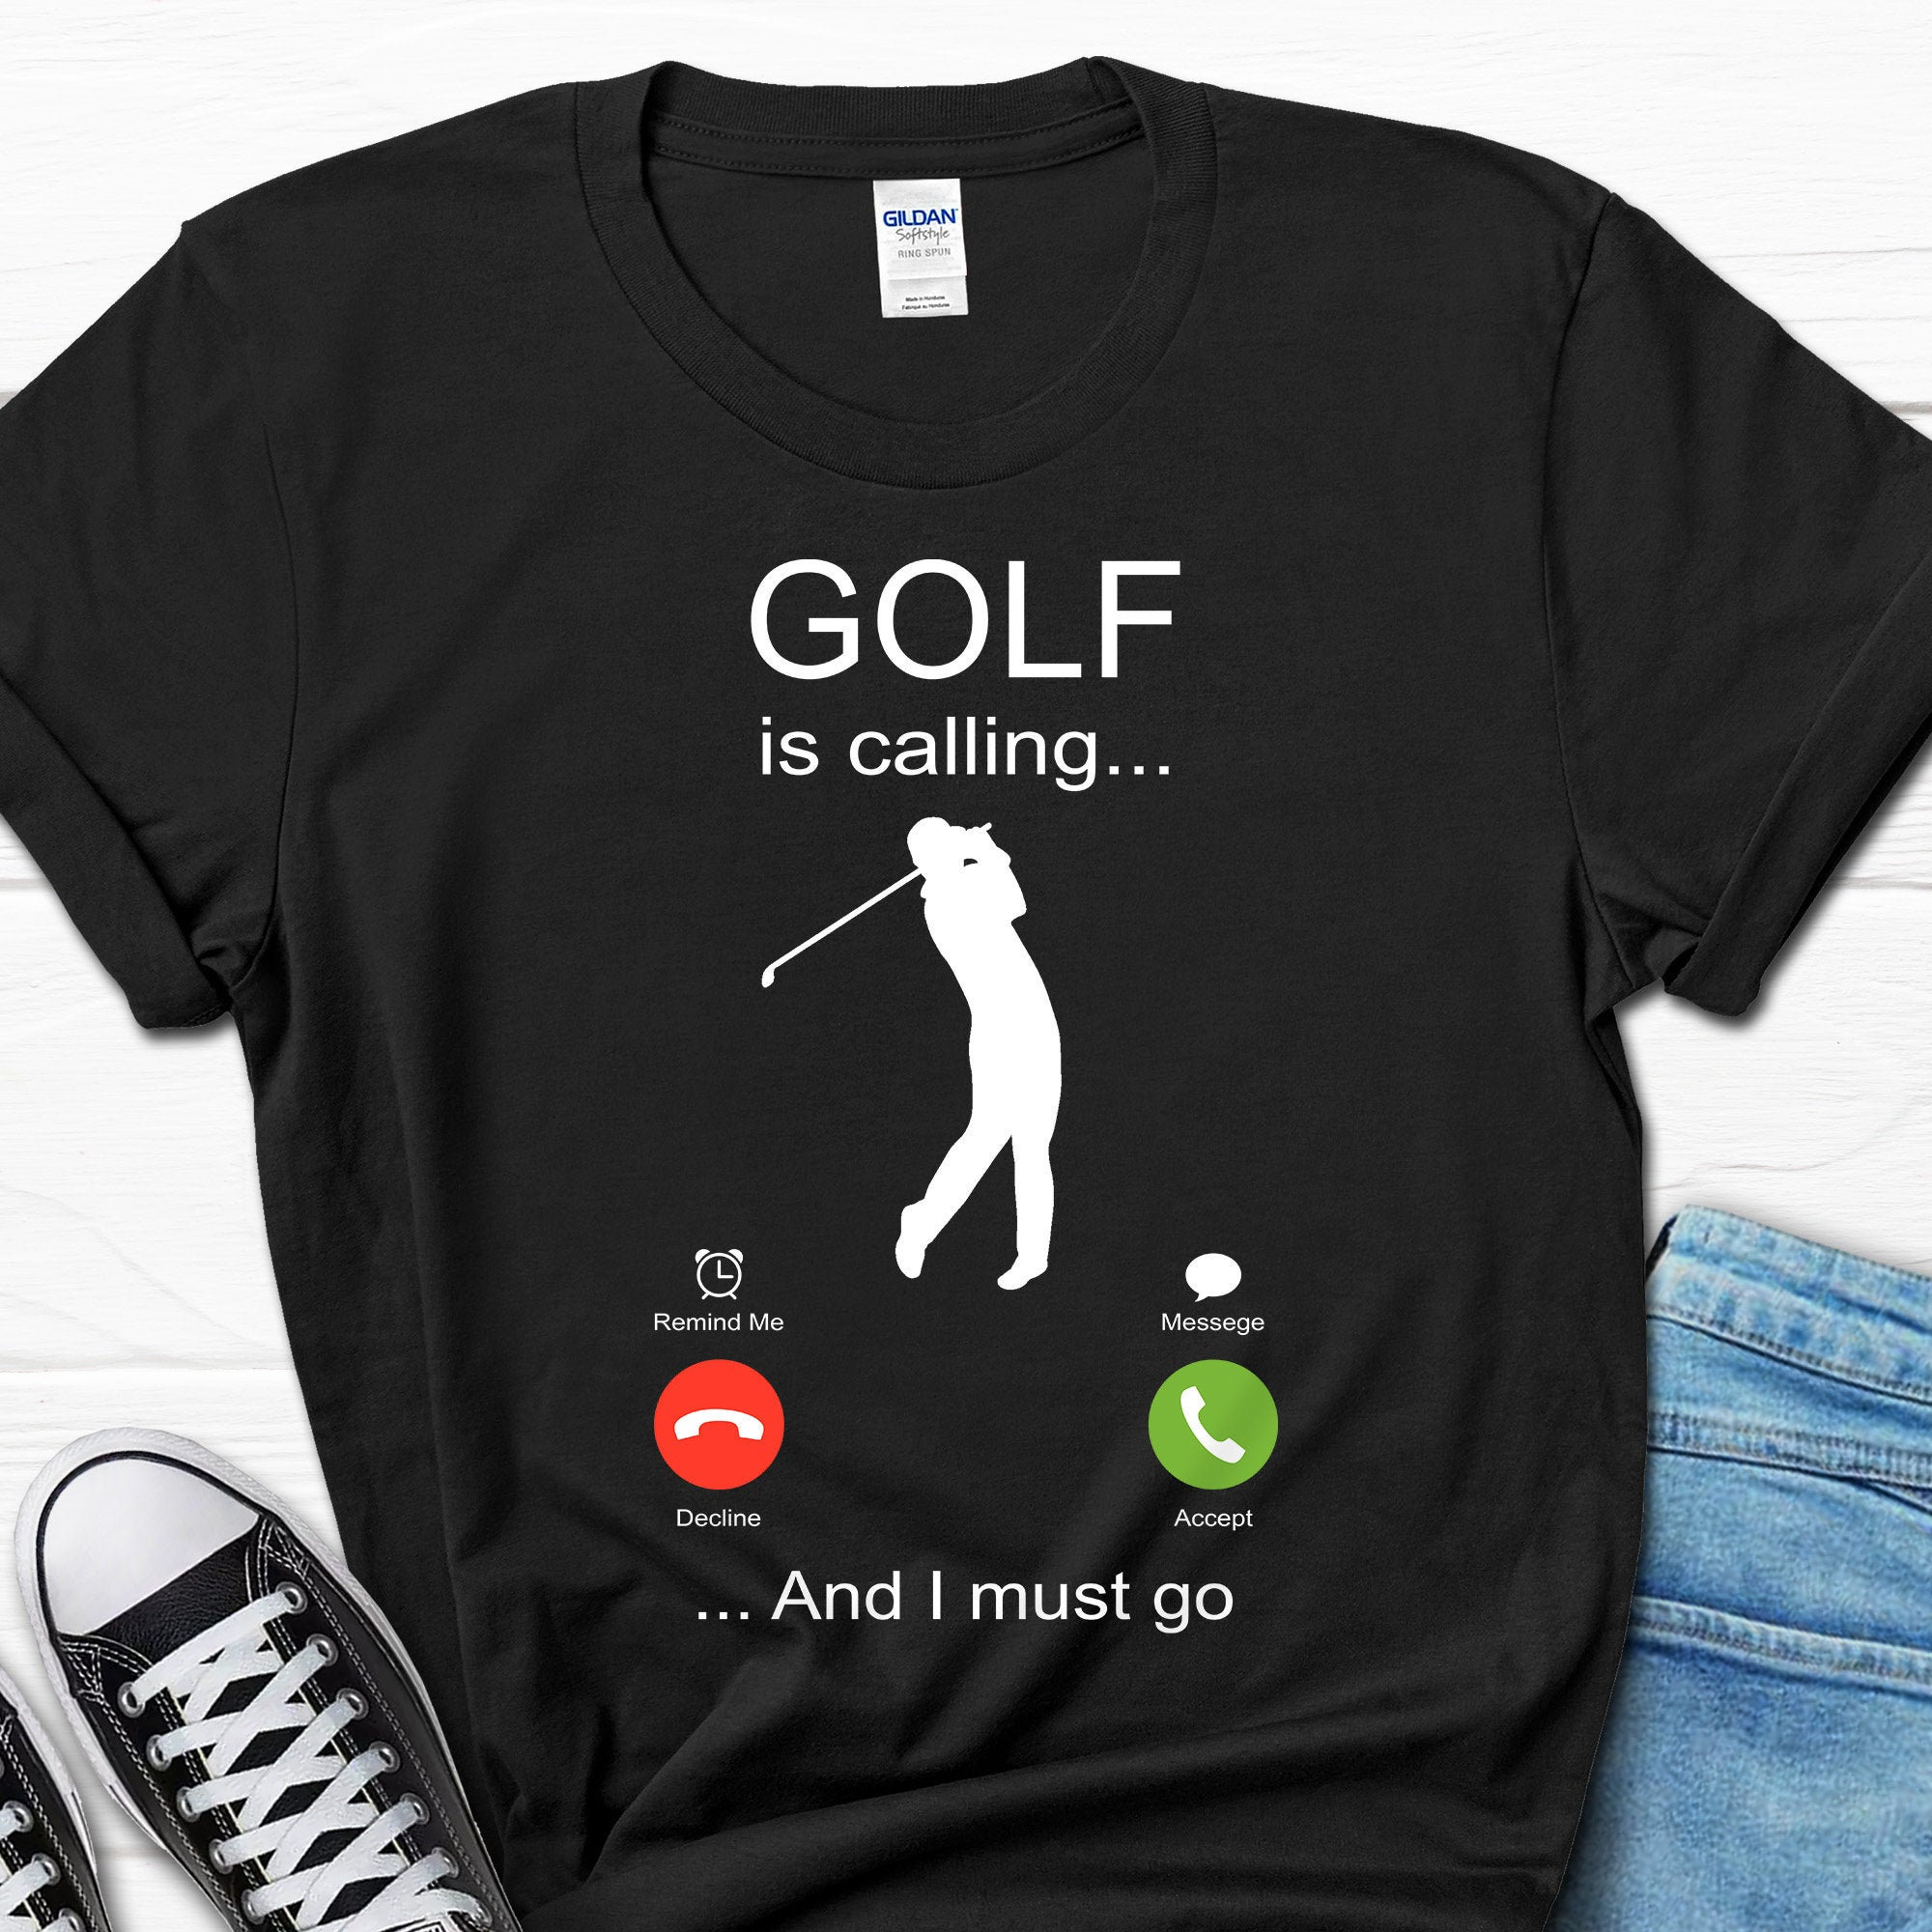 Let's Go Golfing🏌DJ Khaled - Golf Bag #golf #shorts